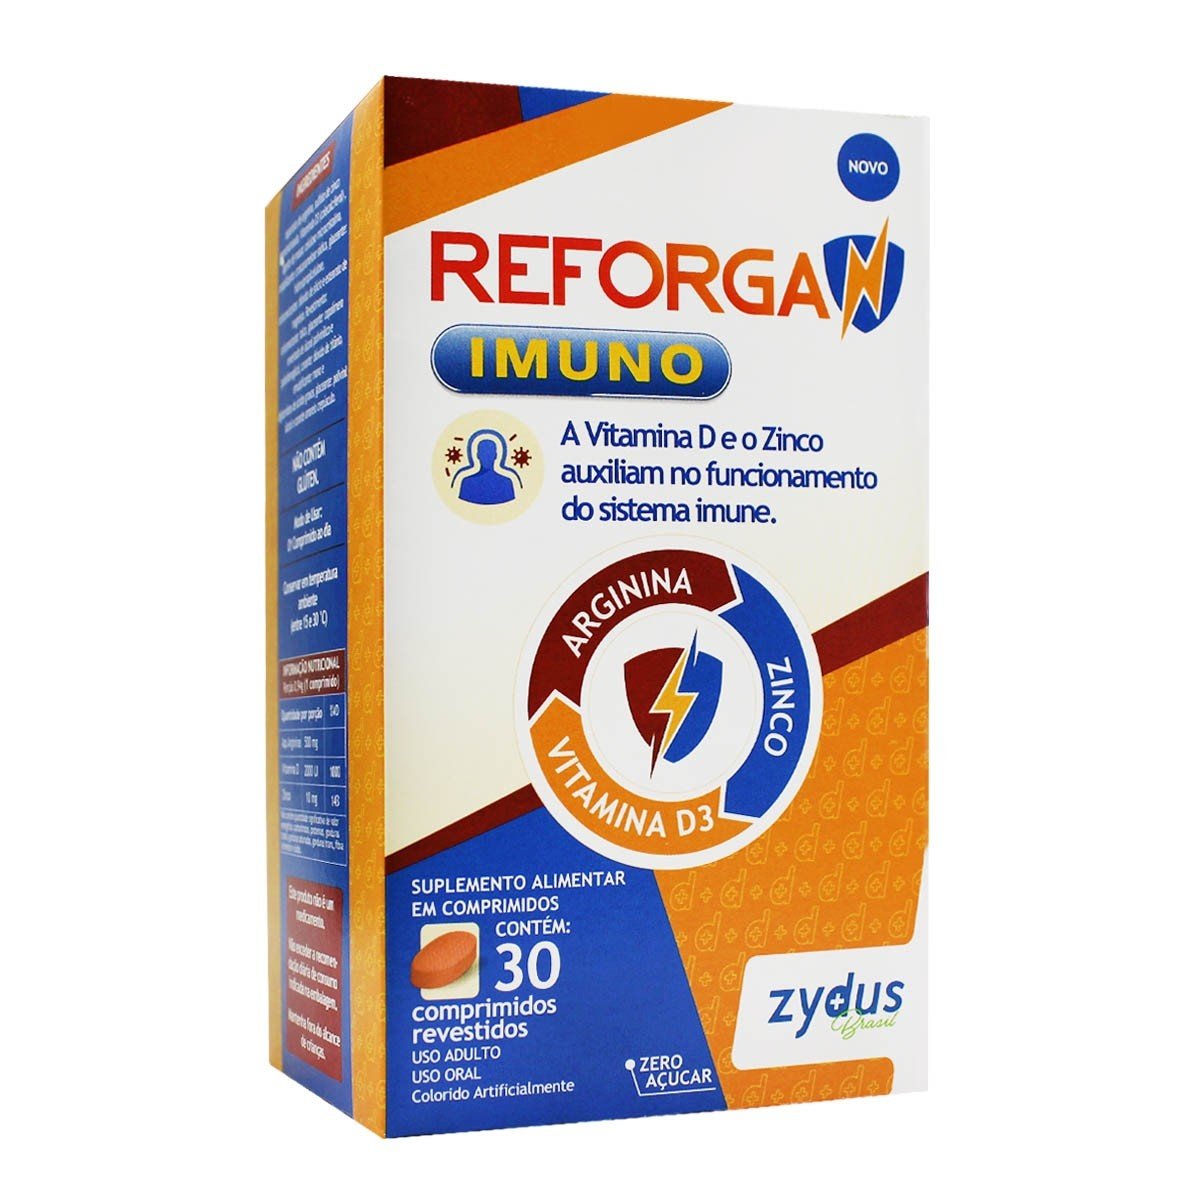 https://www.drogariaminasbrasil.com.br/media/product/265/reforgan-imuno-com-30-comprimidos-revestidos-zydus-124.jpg